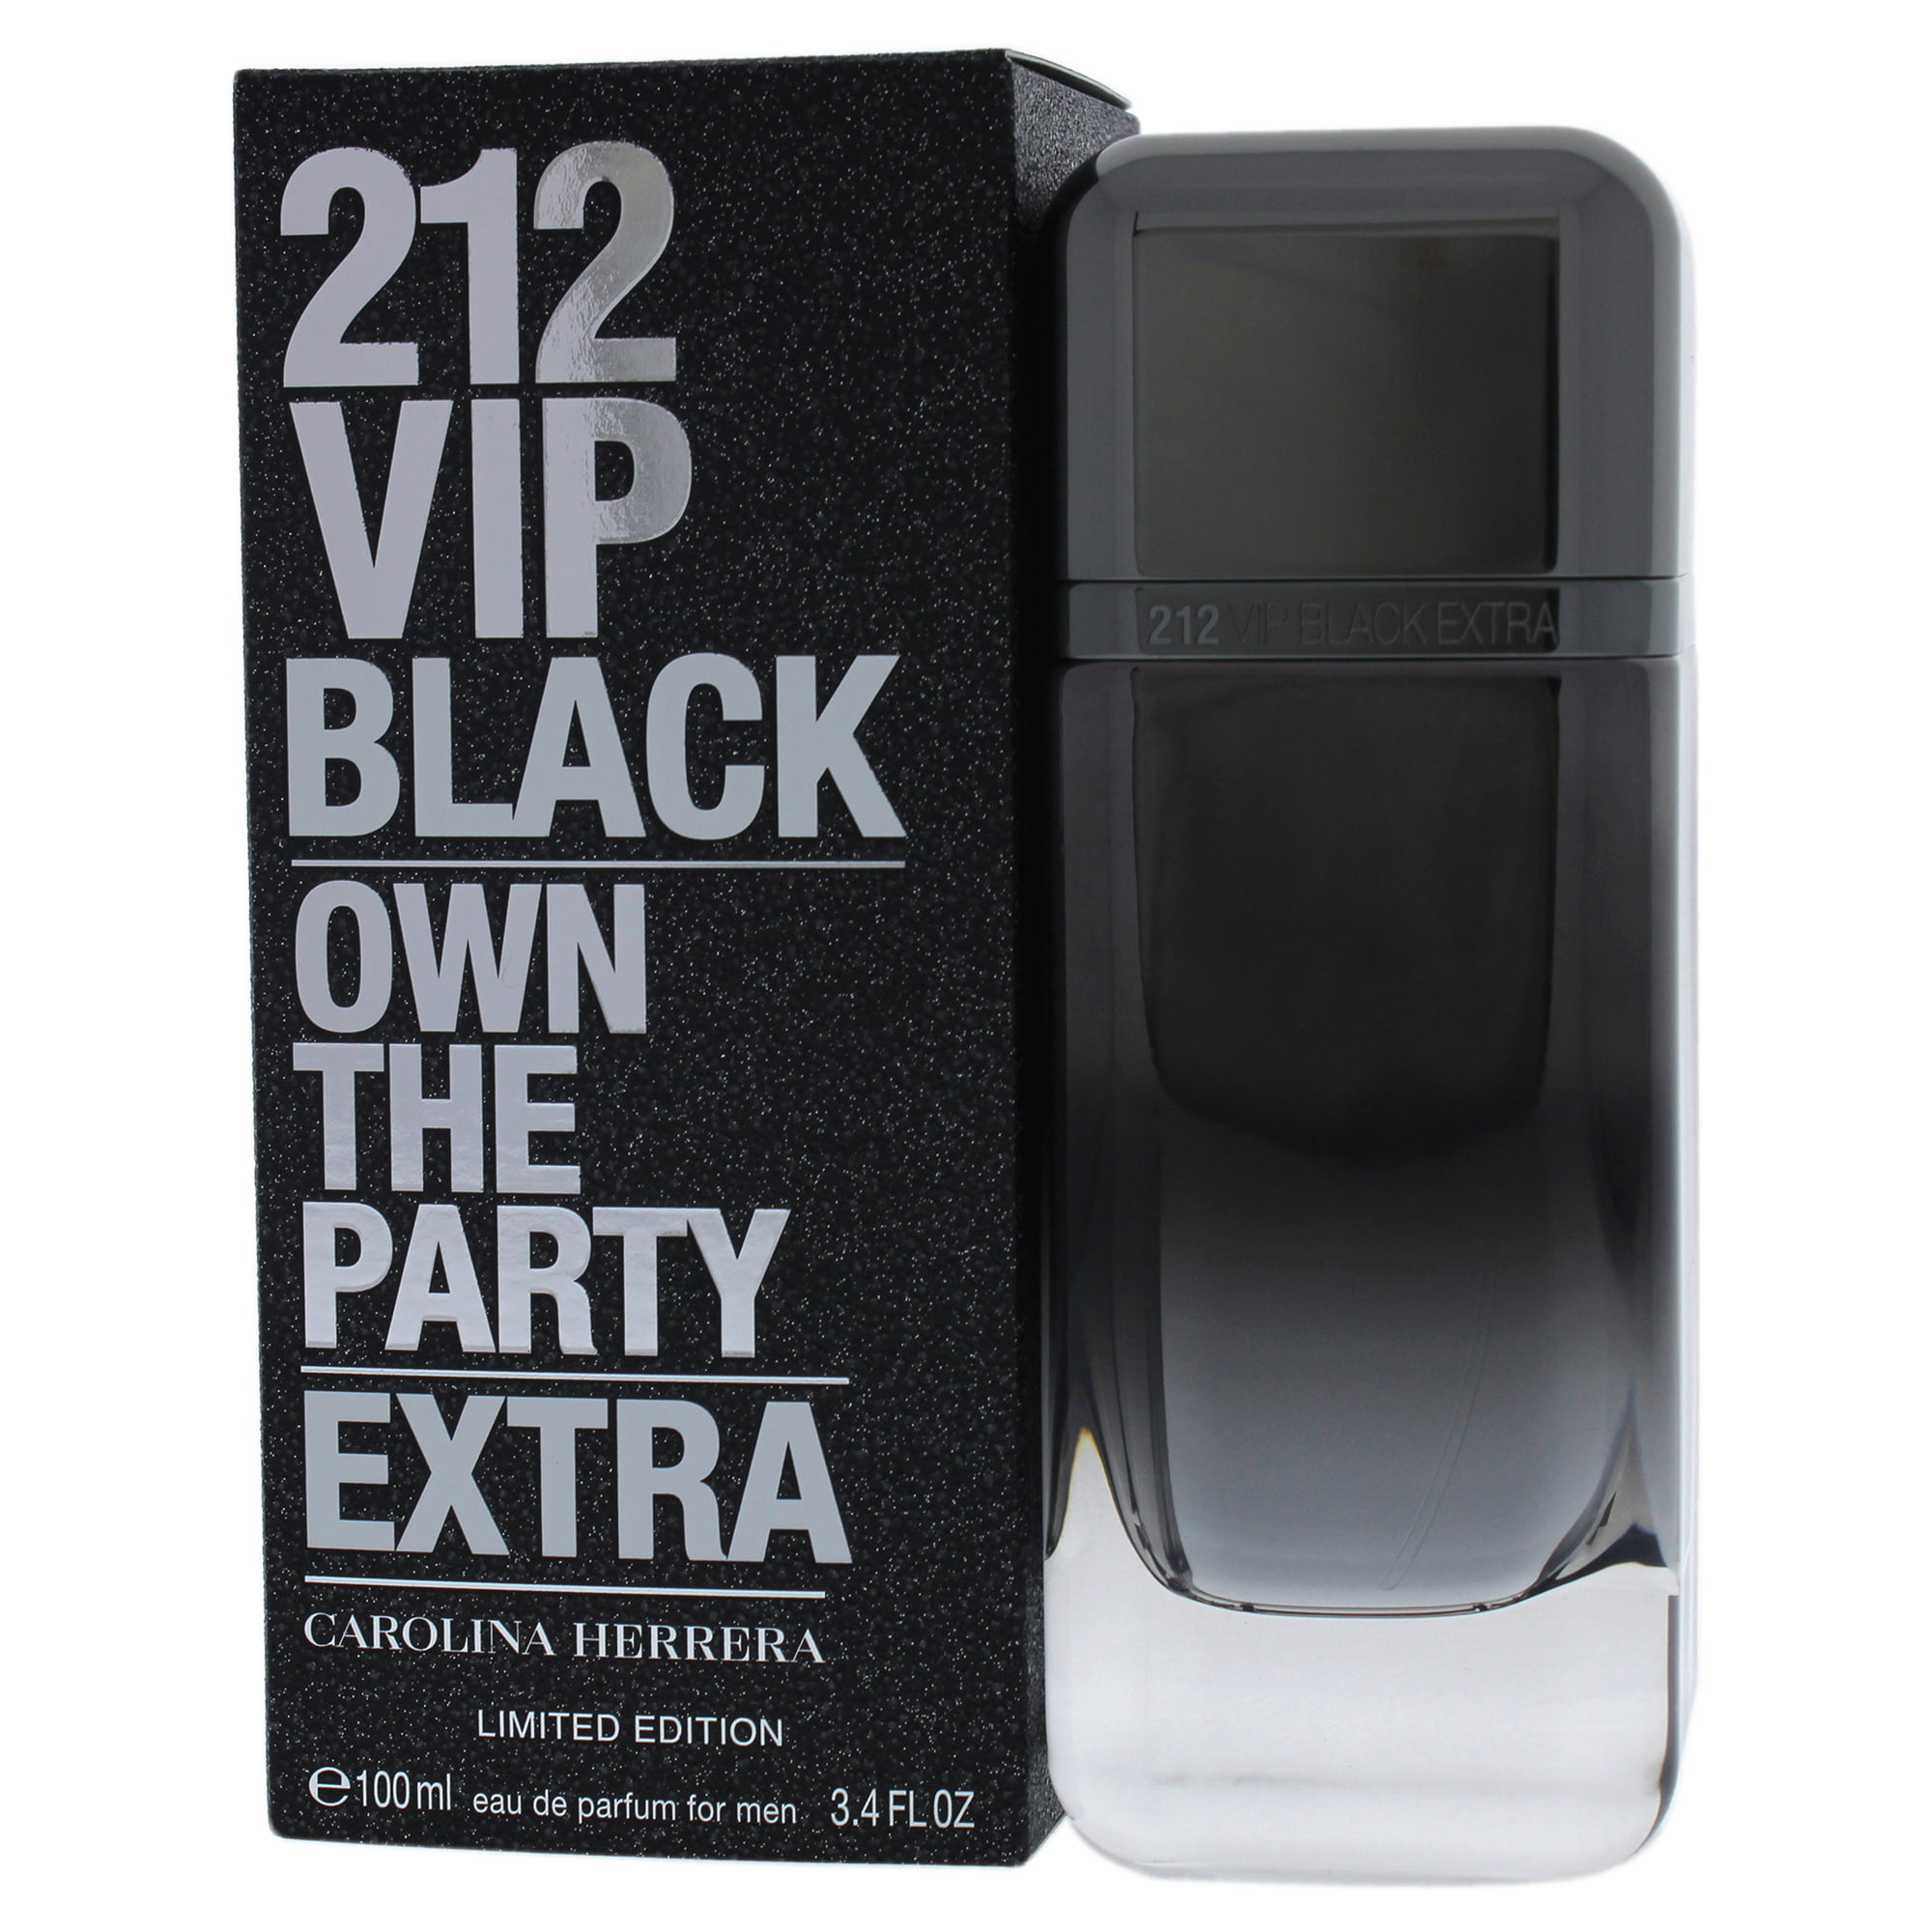 Extra limited. Carolina Herrera 212 VIP Black. 212 VIP Black Extra Carolina Herrera. Carolina Herrera 212 VIP own. Carolina Herrera 212 VIP men Black.